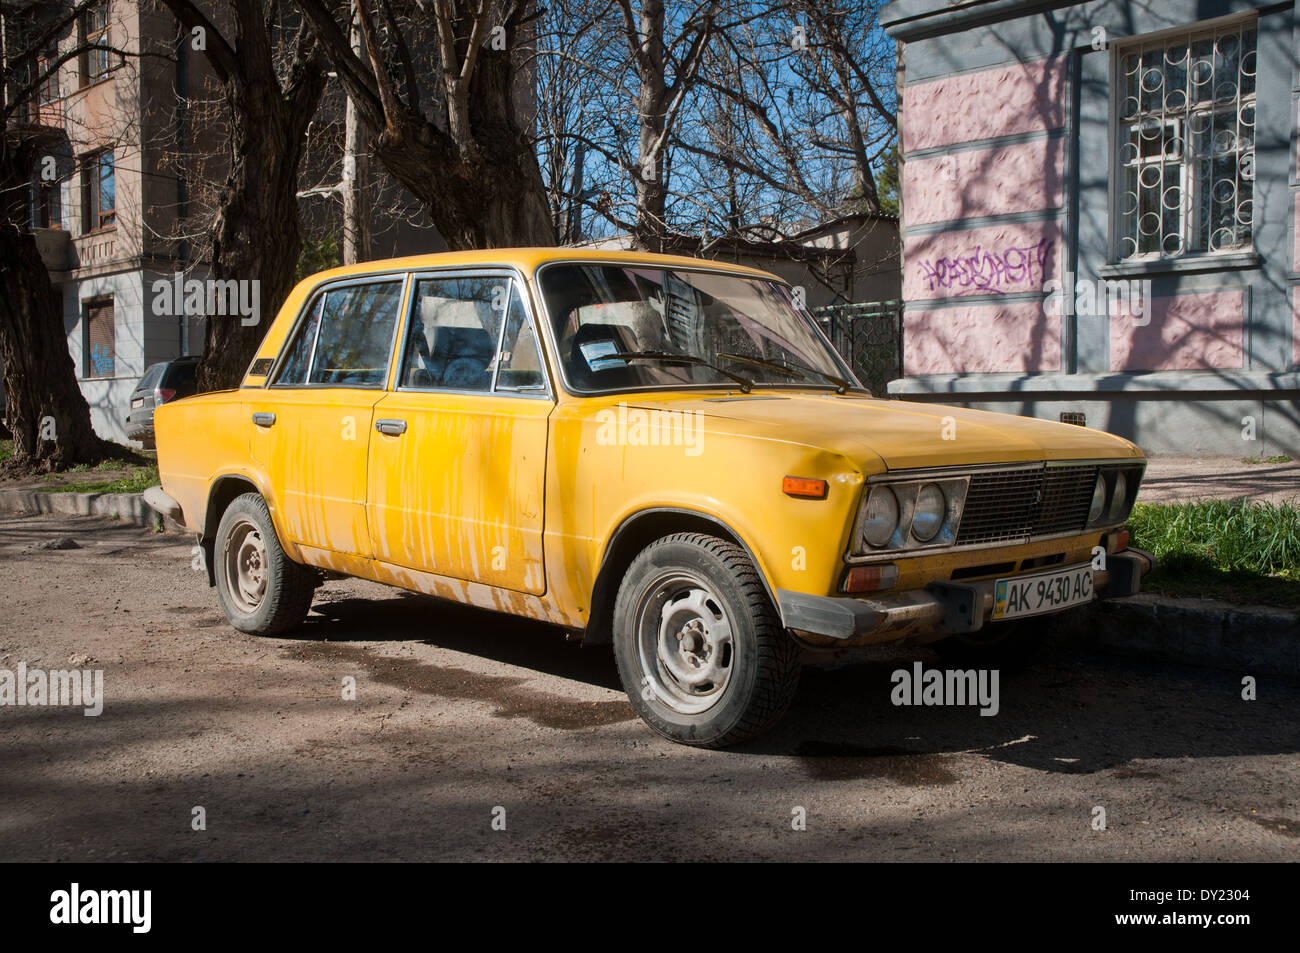 WAZ 2106 (Lada 1600) car from Russian car manufacturer AvtoVAZ on street in Simferopol, Crimea Stock Photo